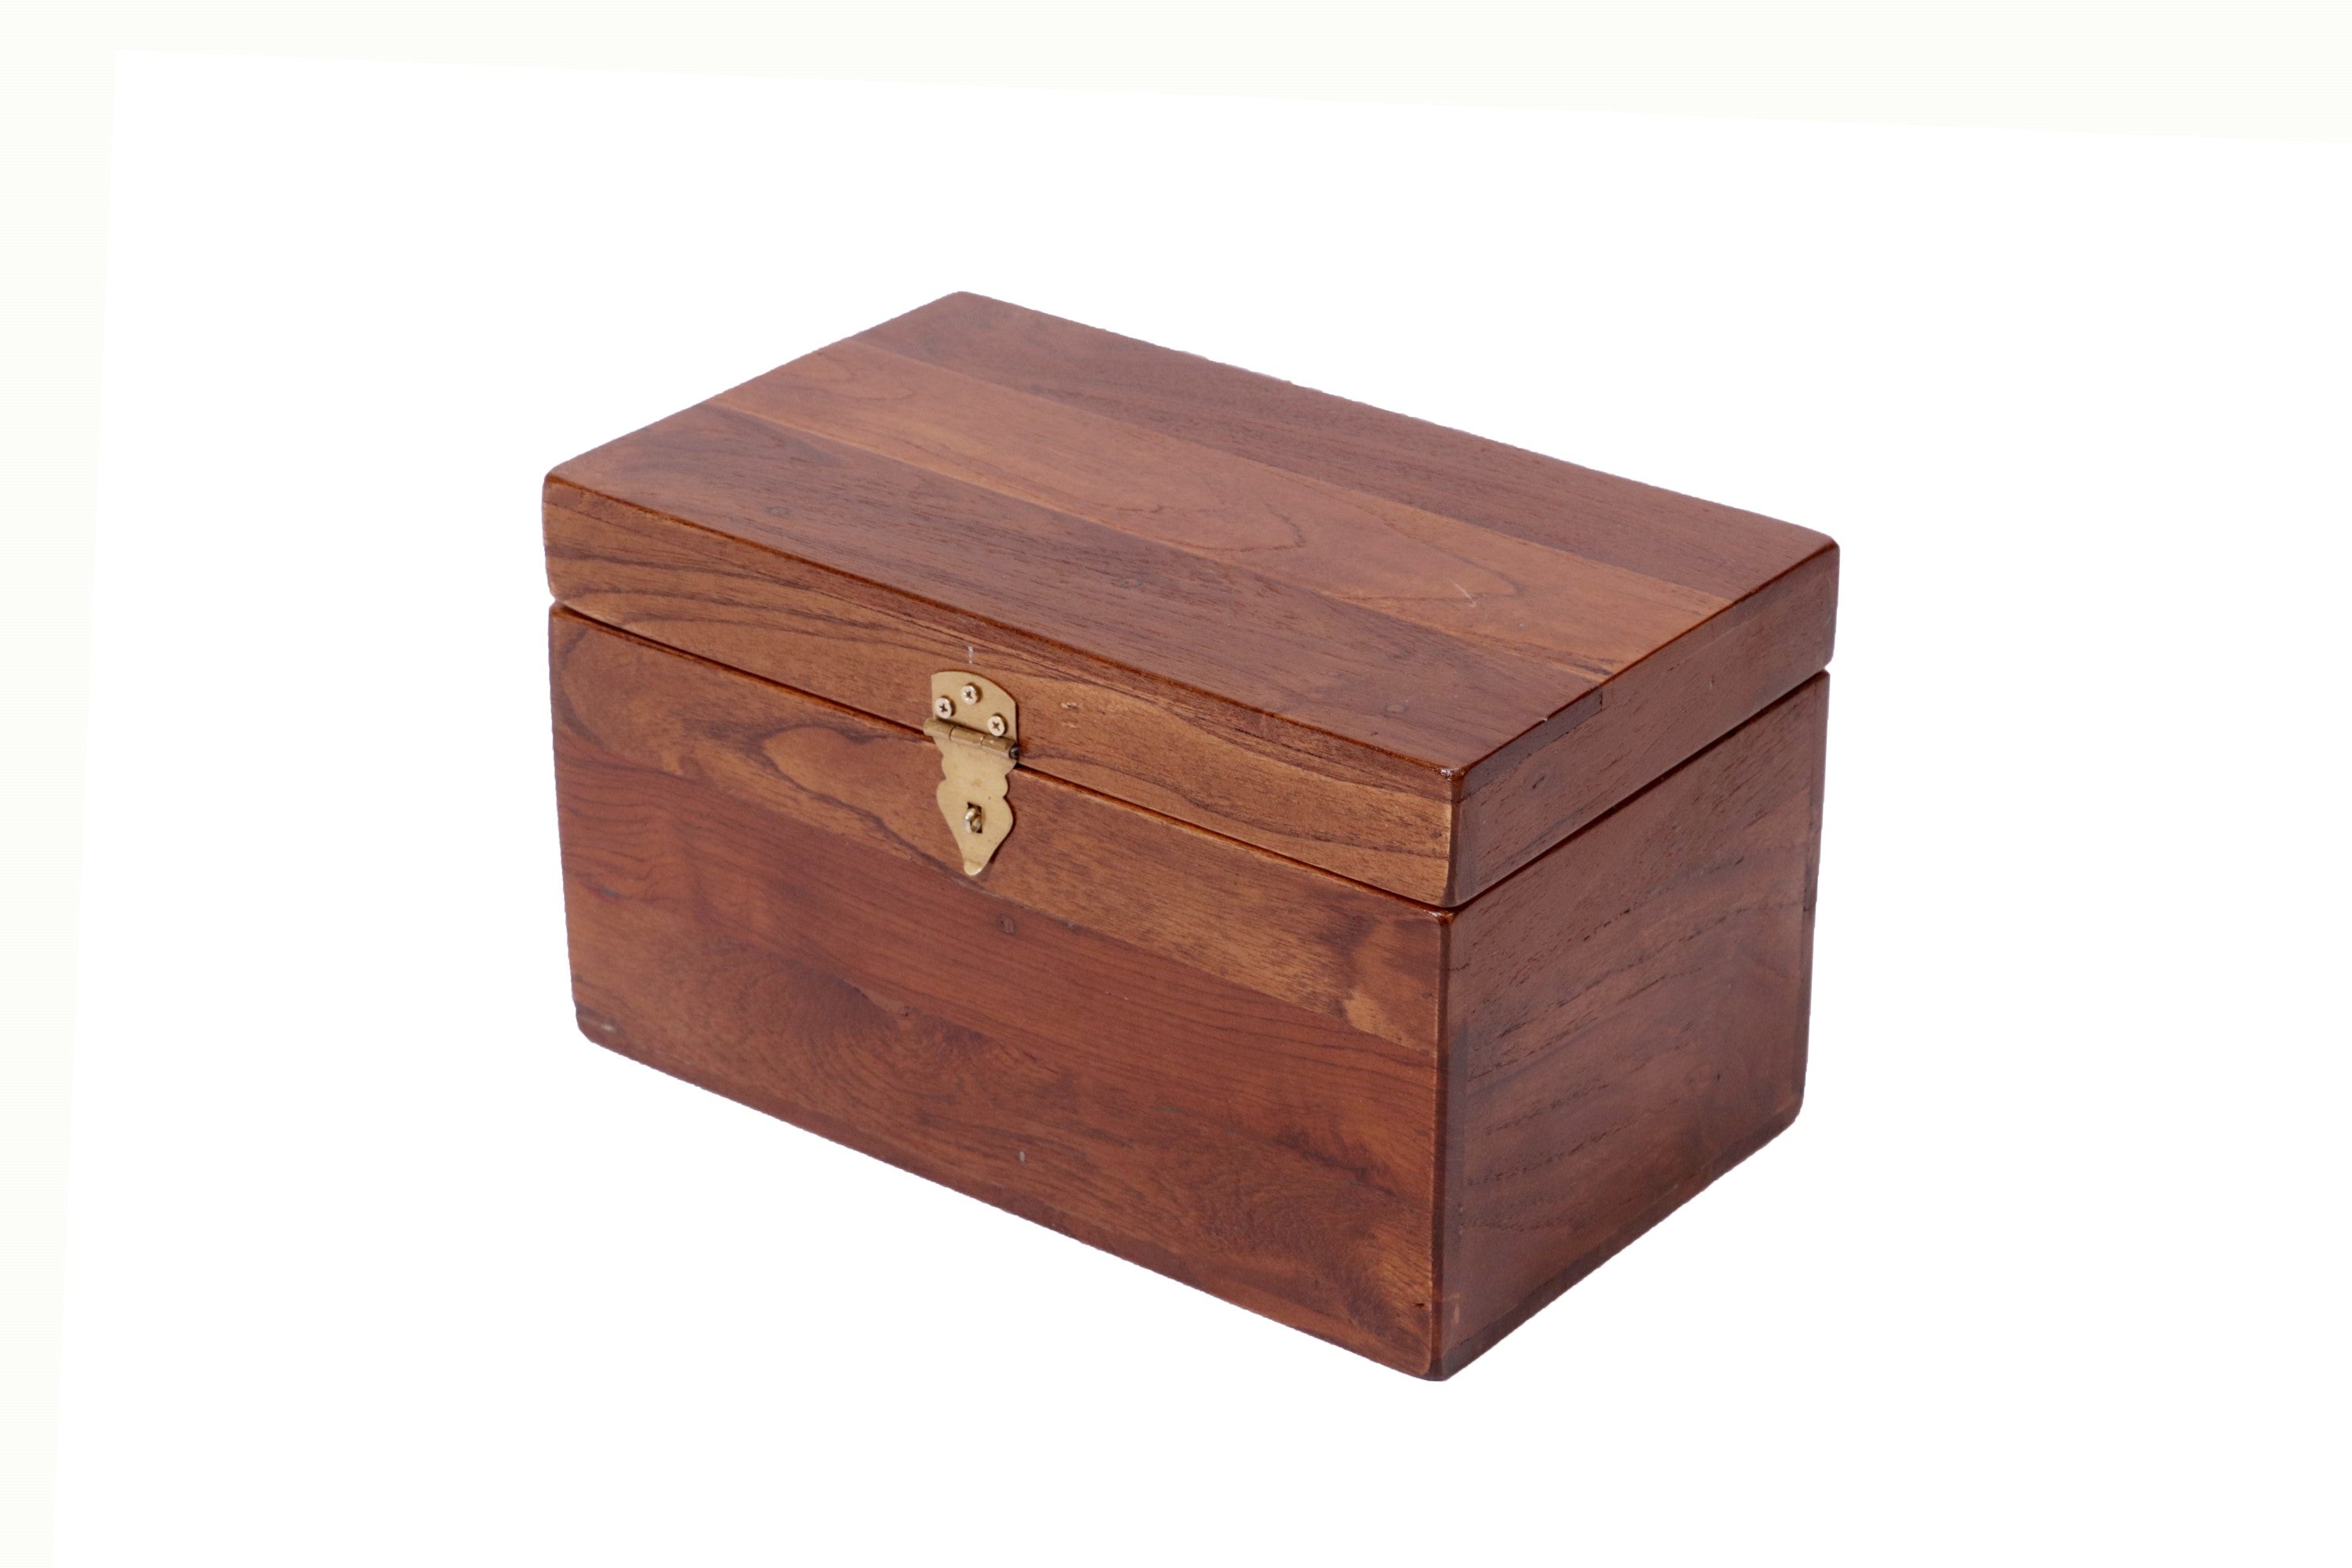 Wooden Simplistic Boxes Wooden Box